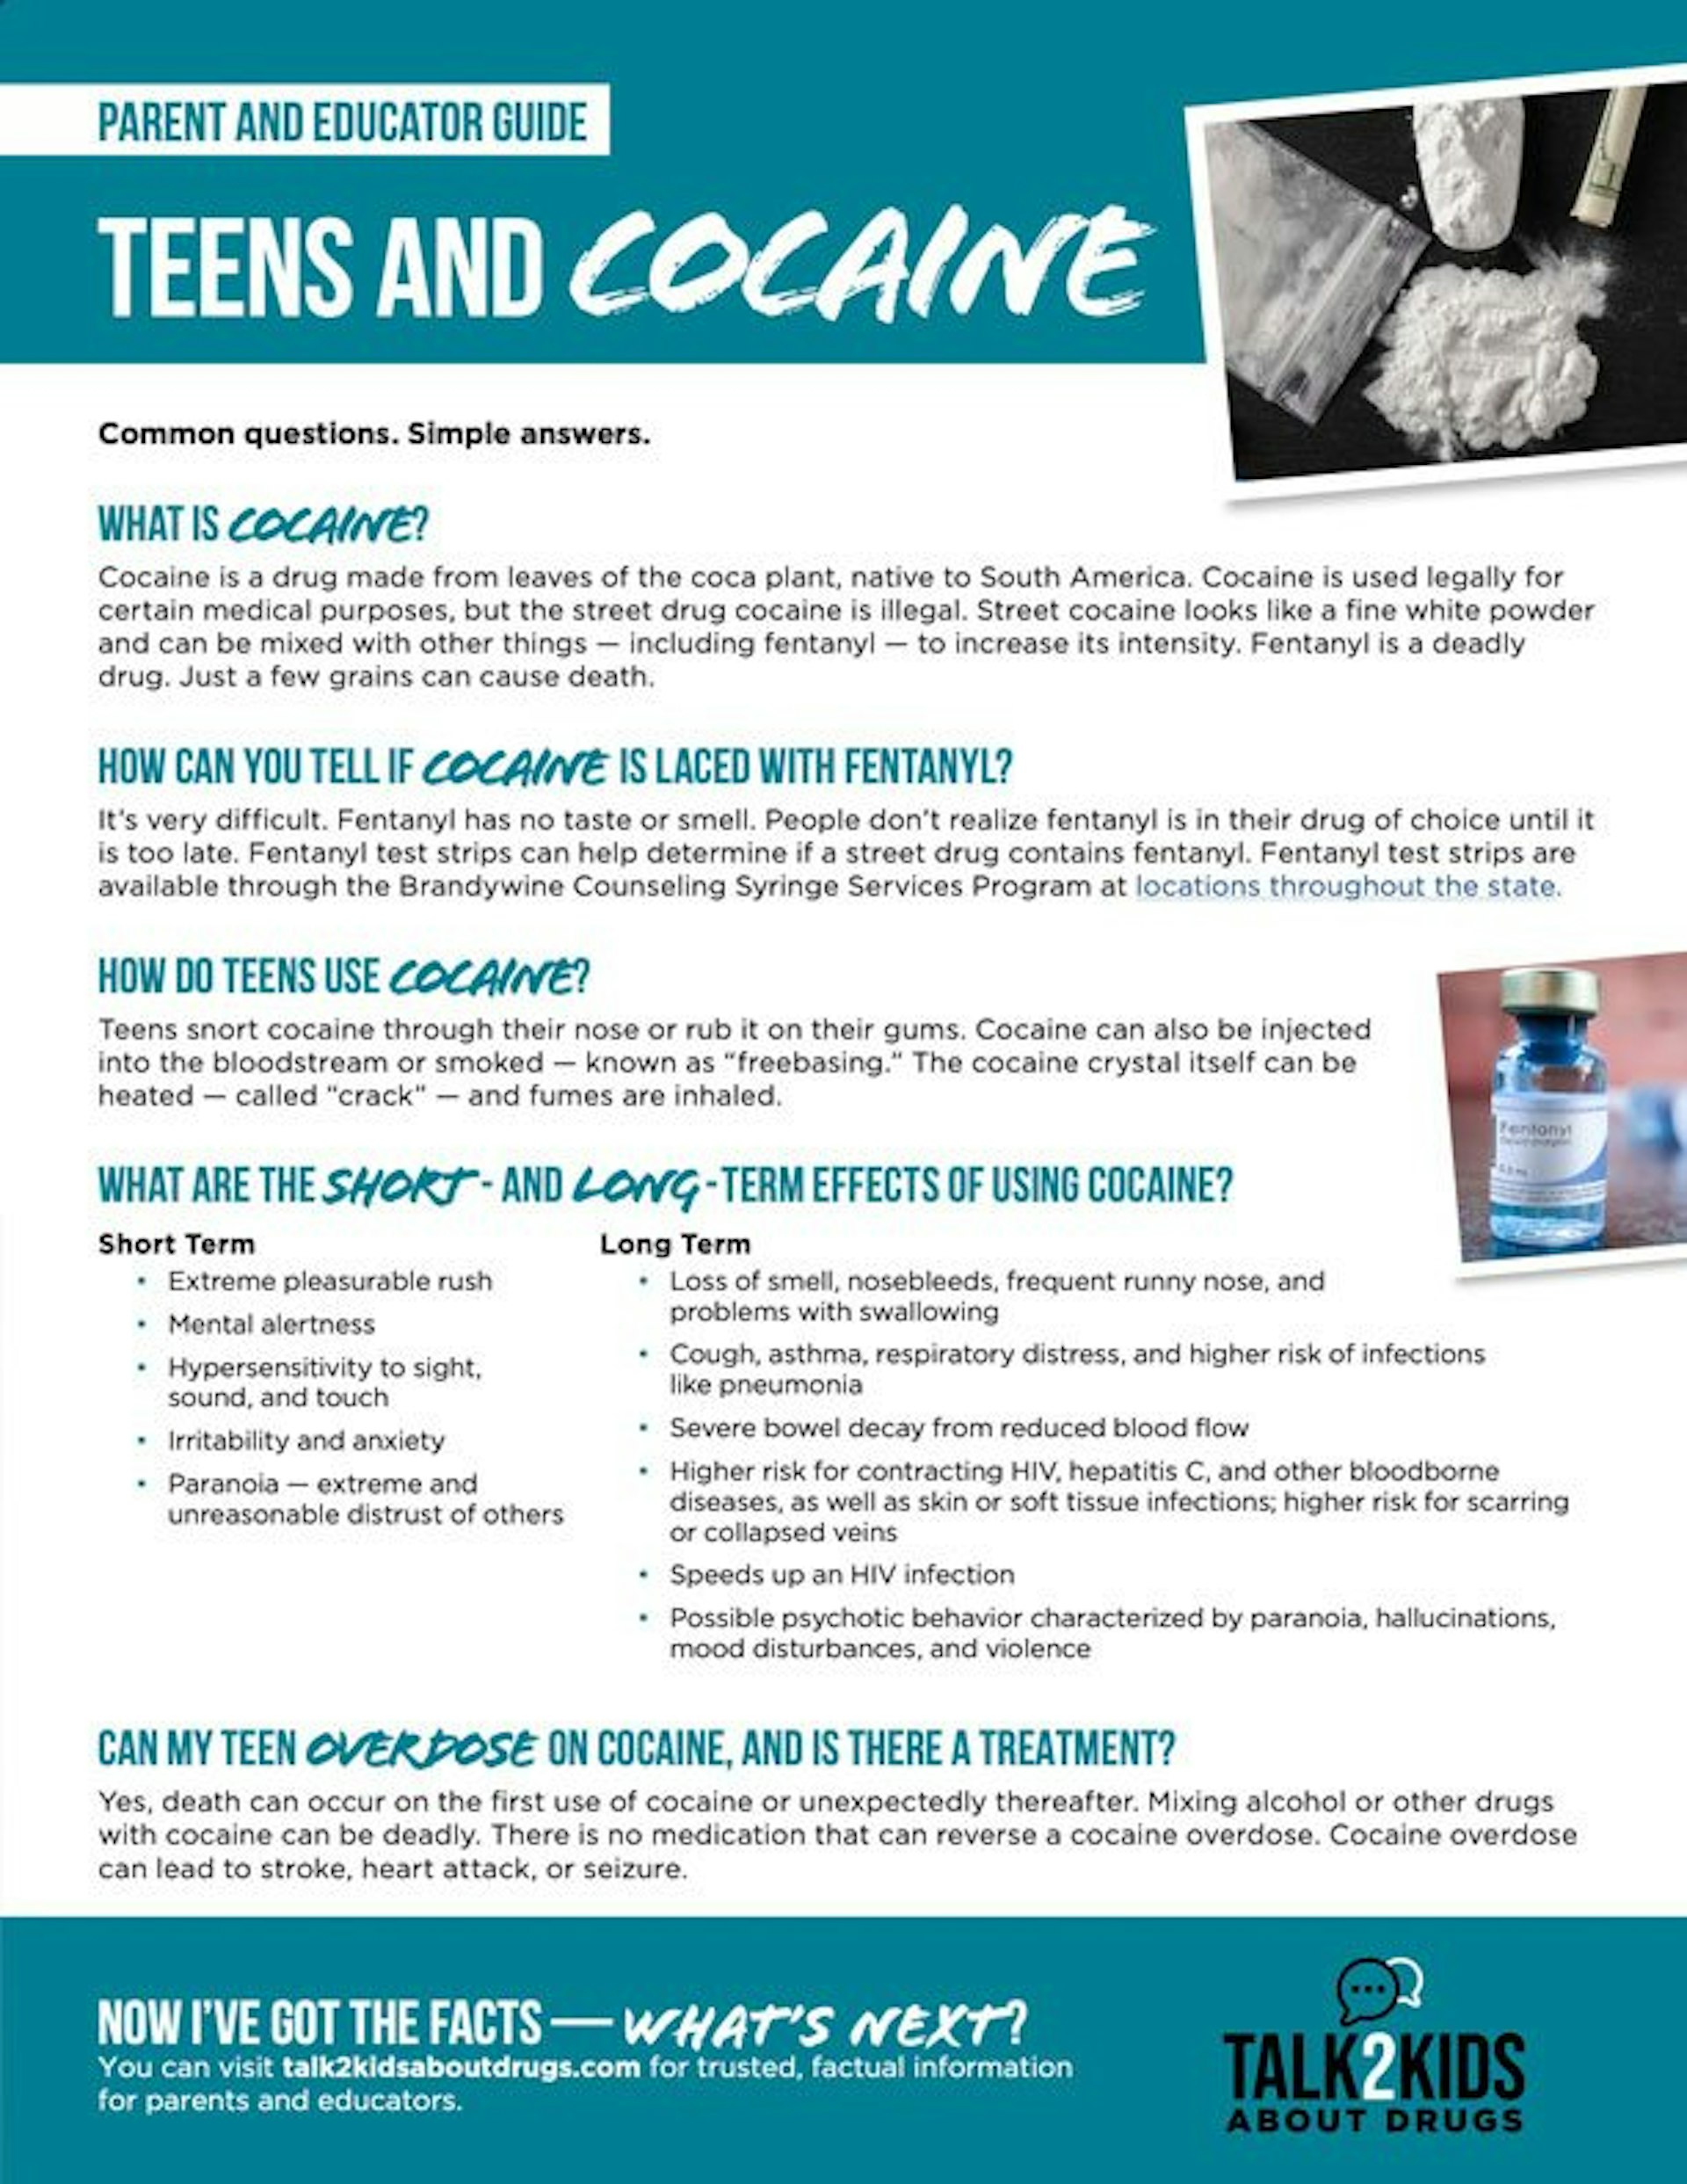 Teens and cocaine